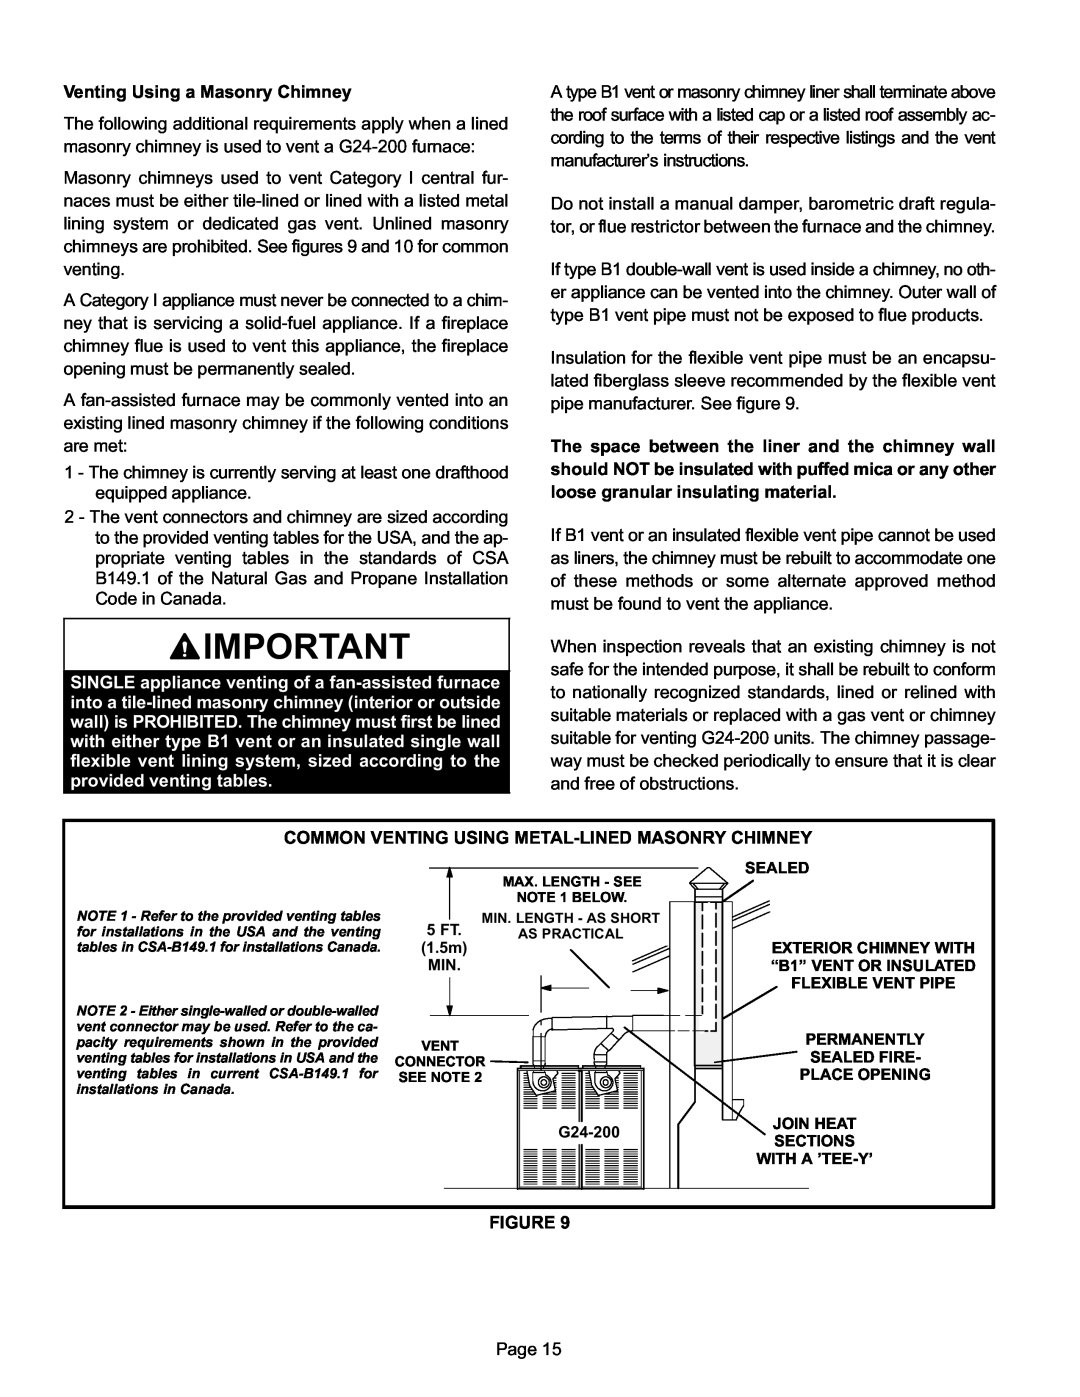 Lennox International Inc G24-200 installation instructions Venting Using a Masonry Chimney 